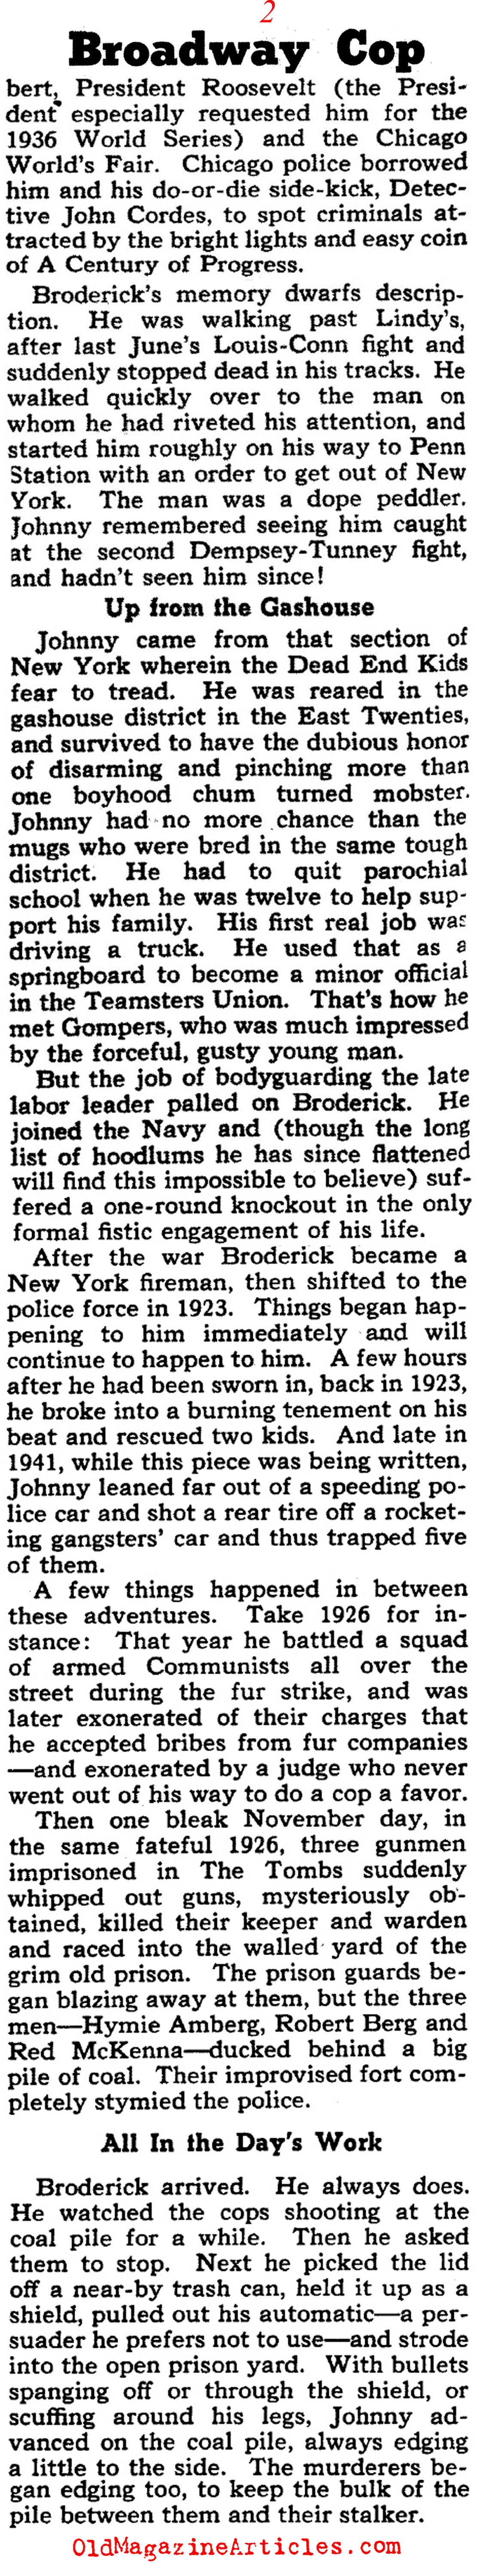 One Tough New York City Cop (Collier's Magazine, 1941)